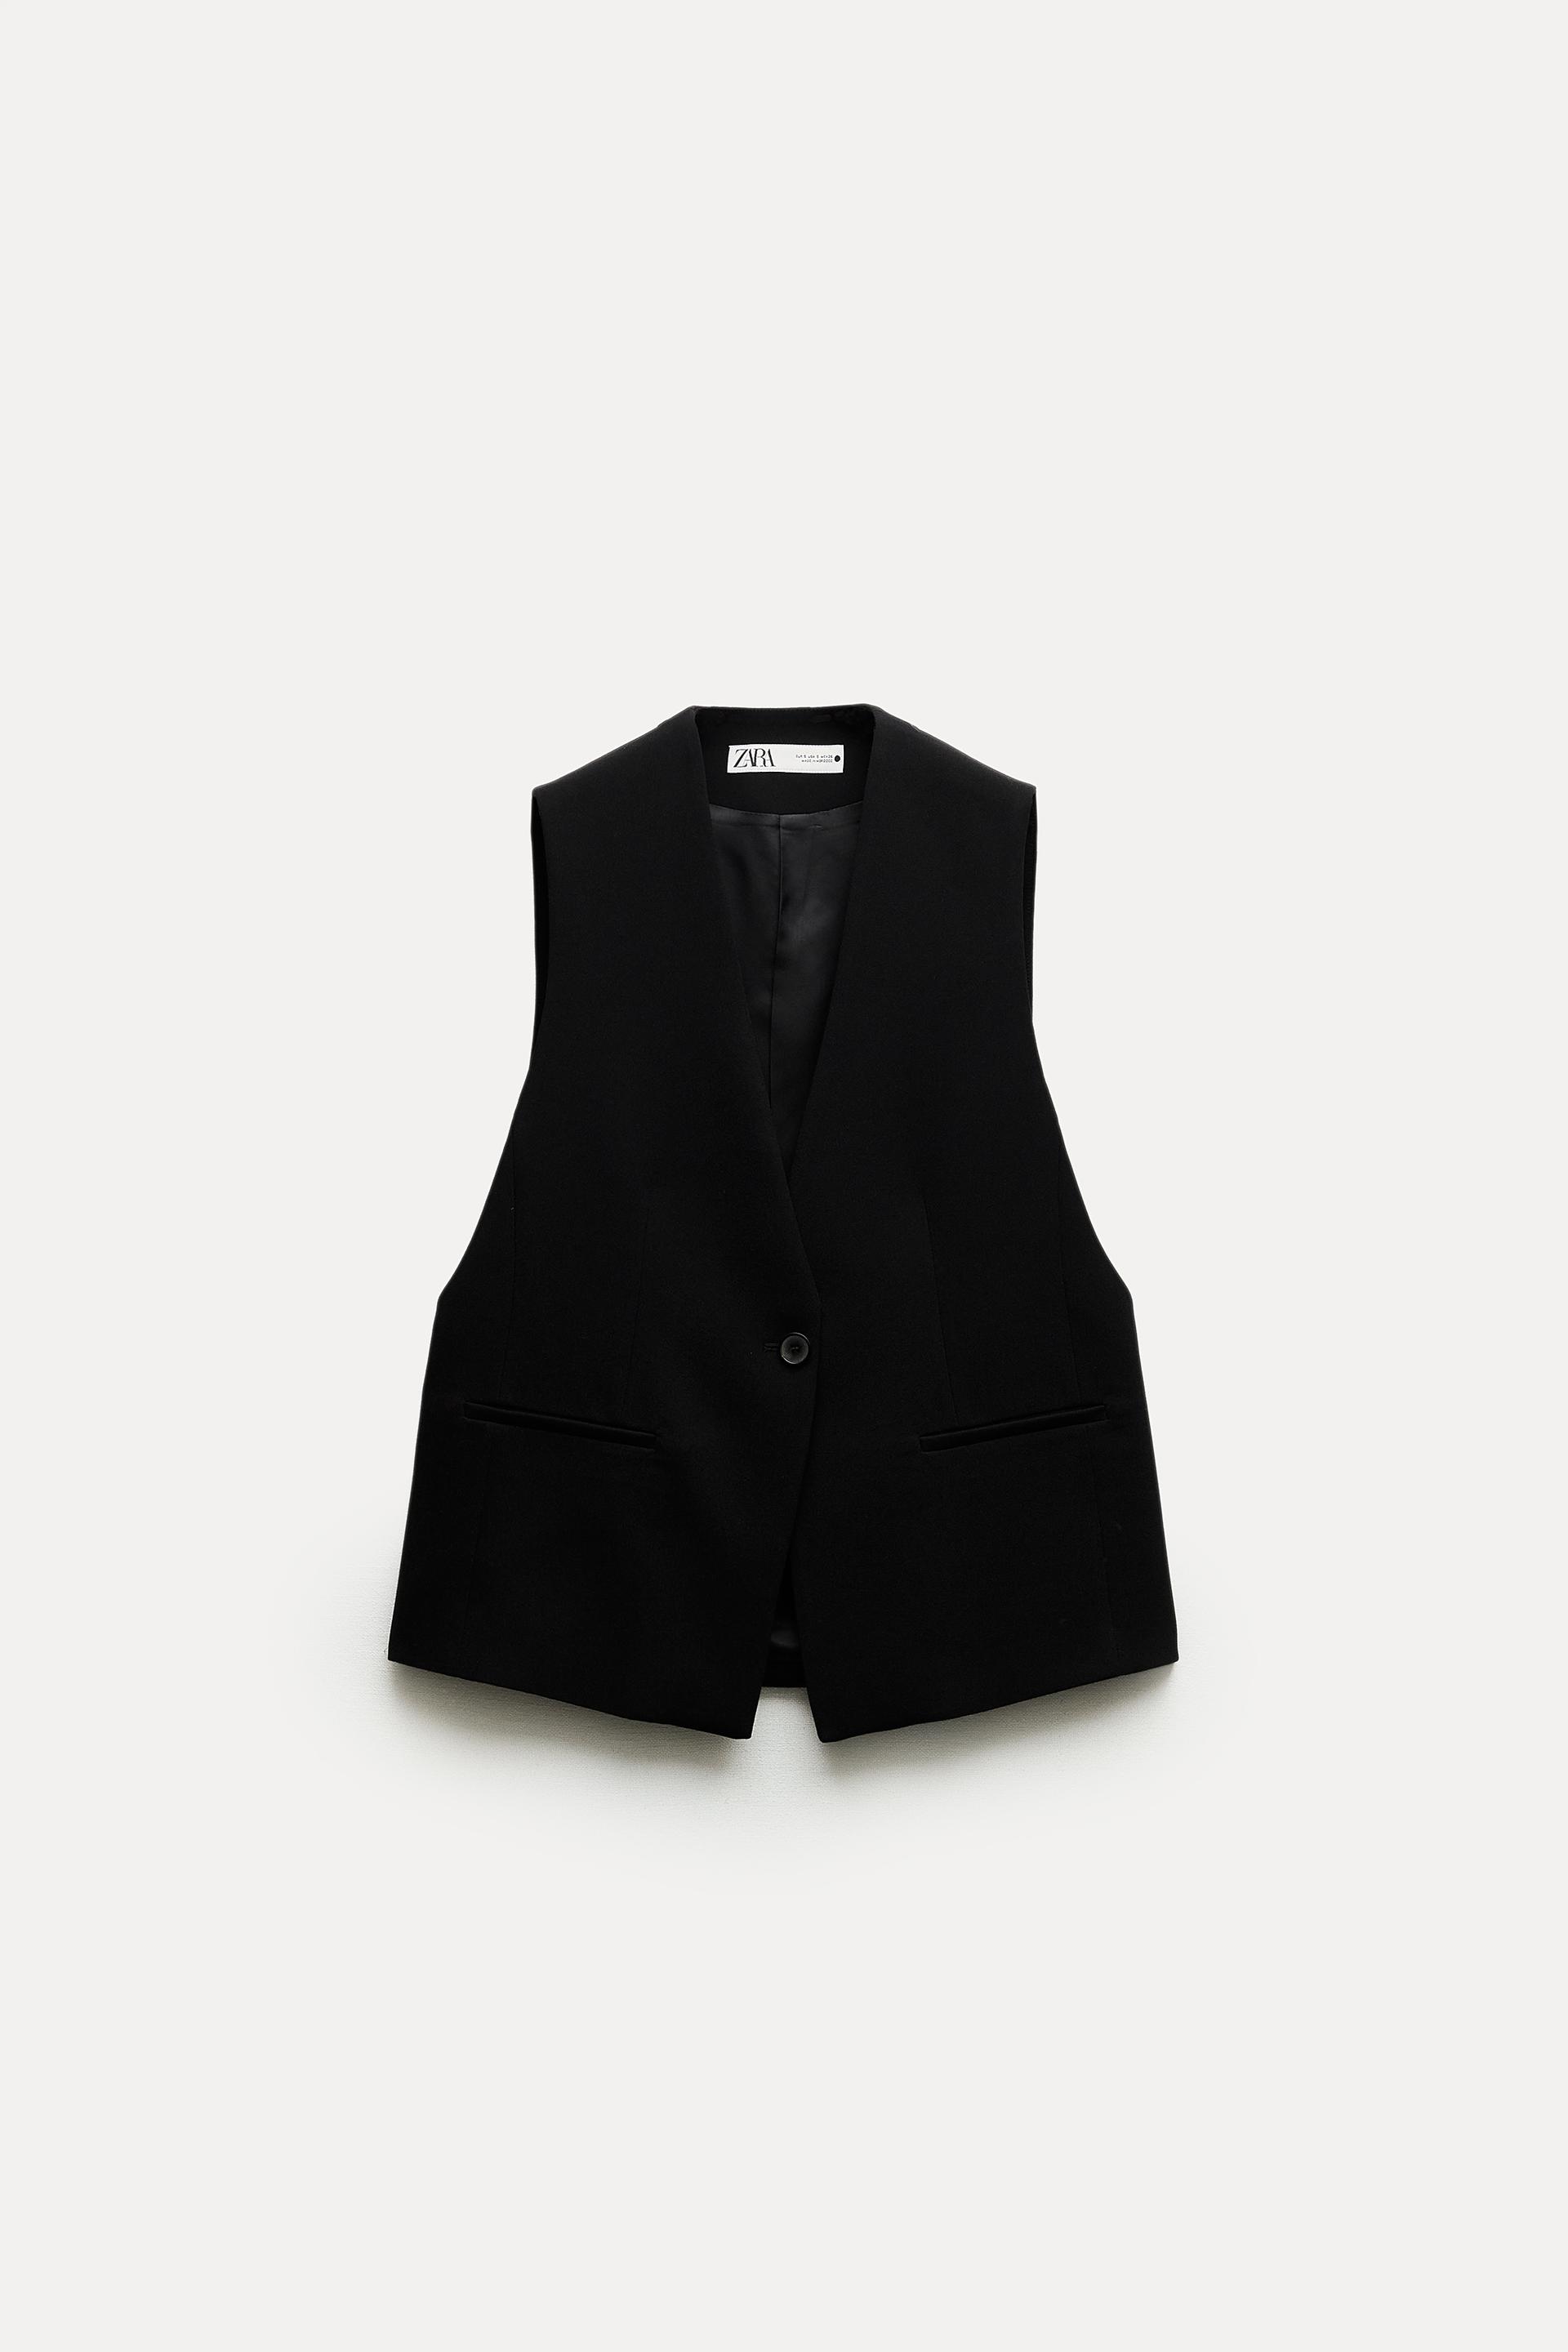 Жилет Zara ZW Collection With Vents, черный блуза zara with side vents зеленый